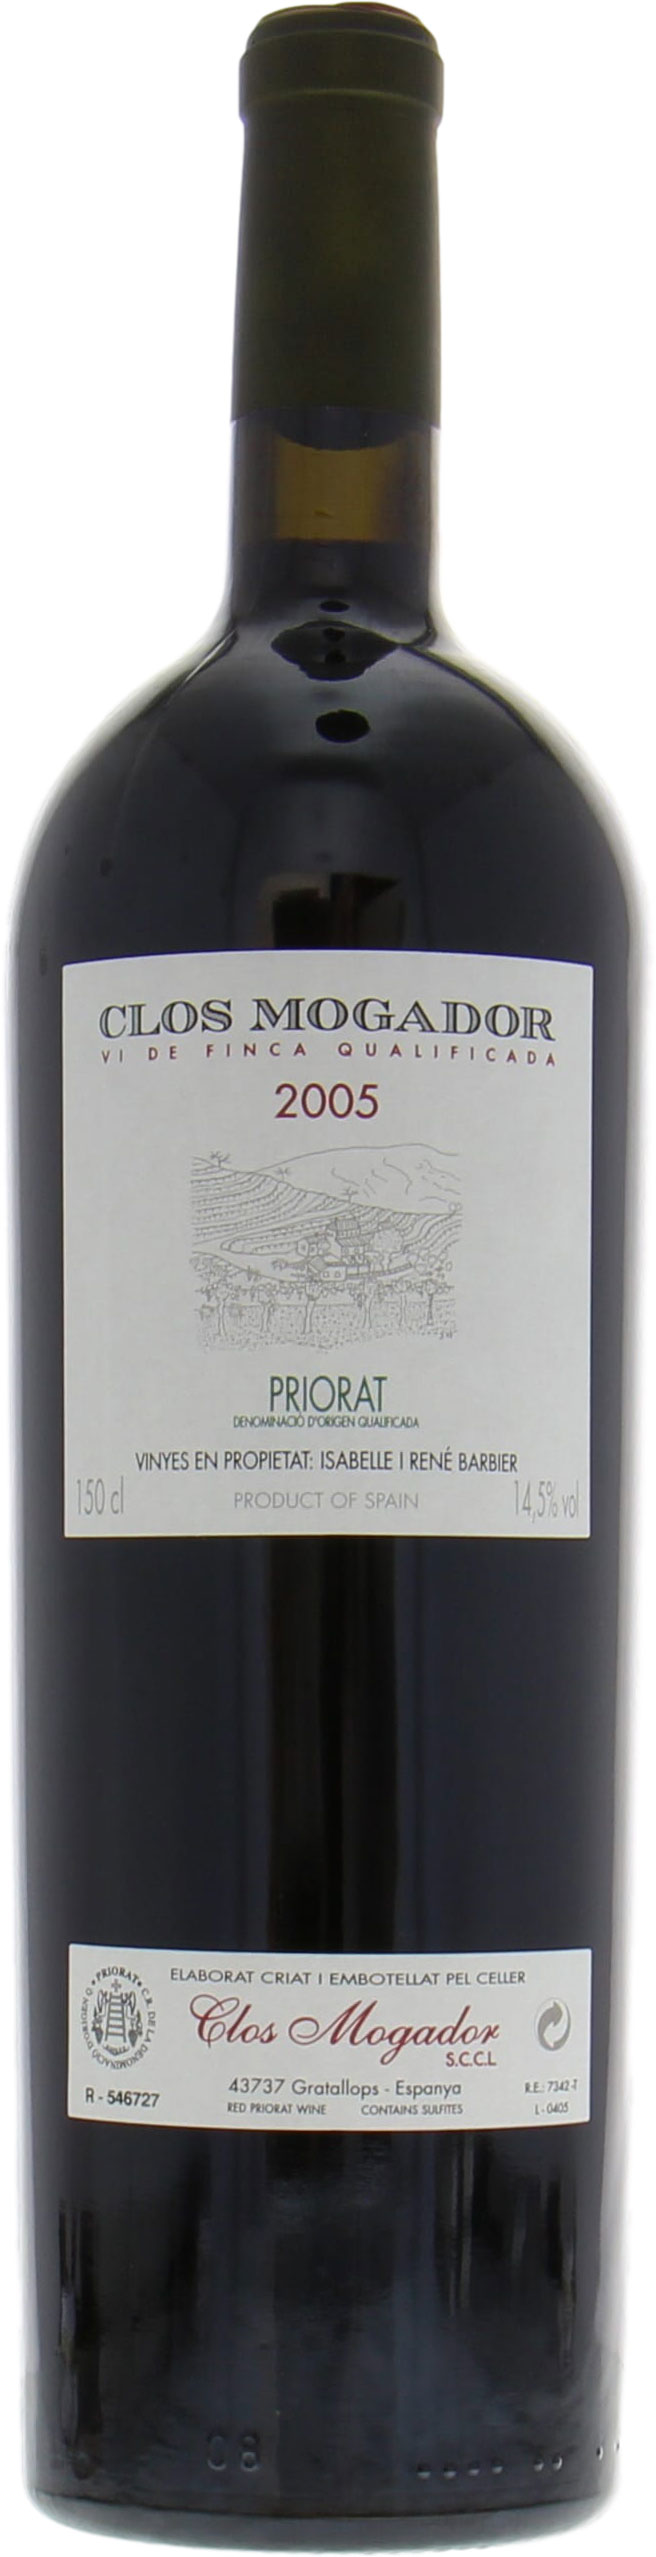 Clos Mogador - Priorat 2005 From Original Wooden Case